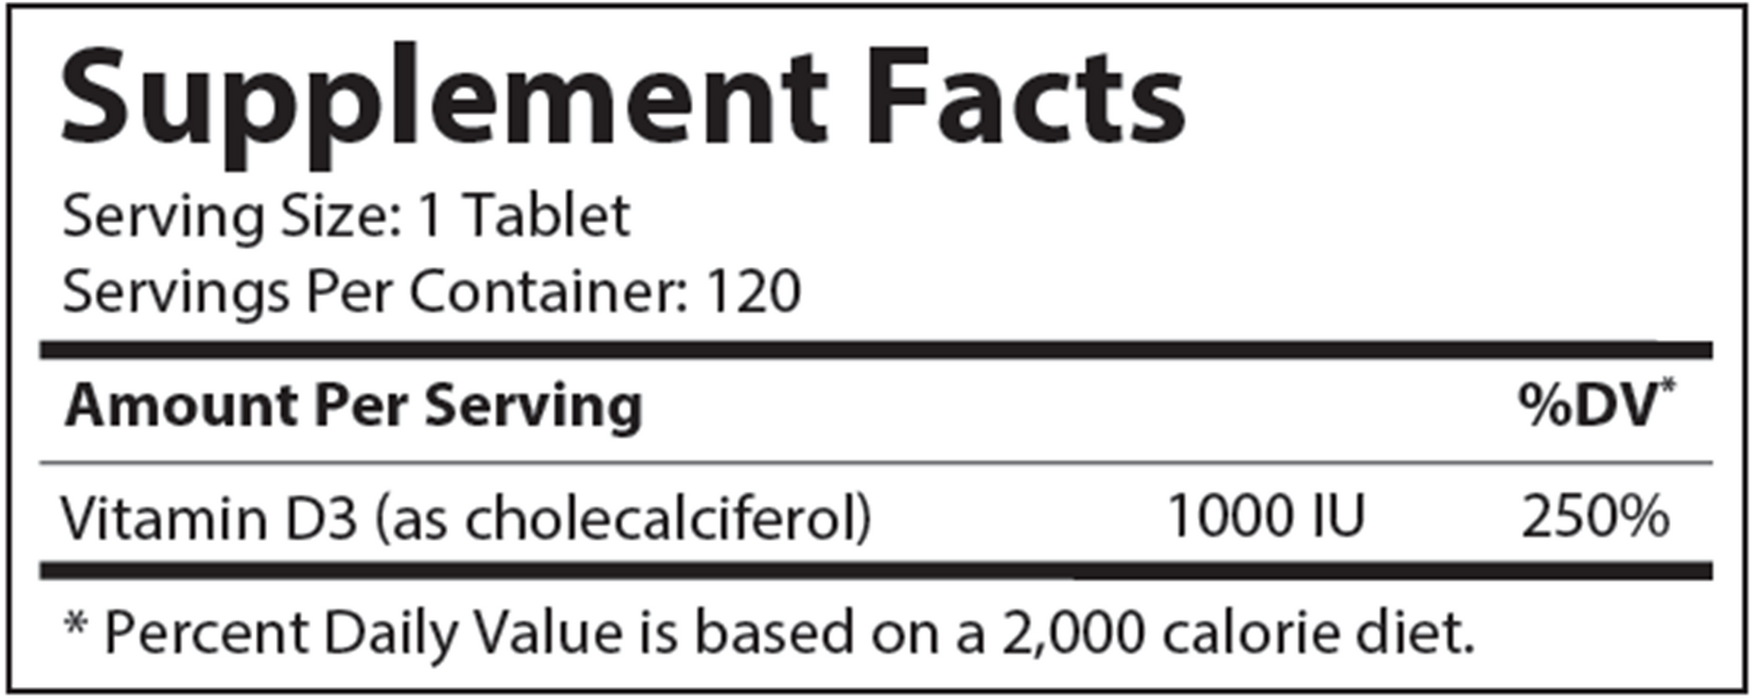 Advanced Nutrition by Zahler Junior D3 120 tabs